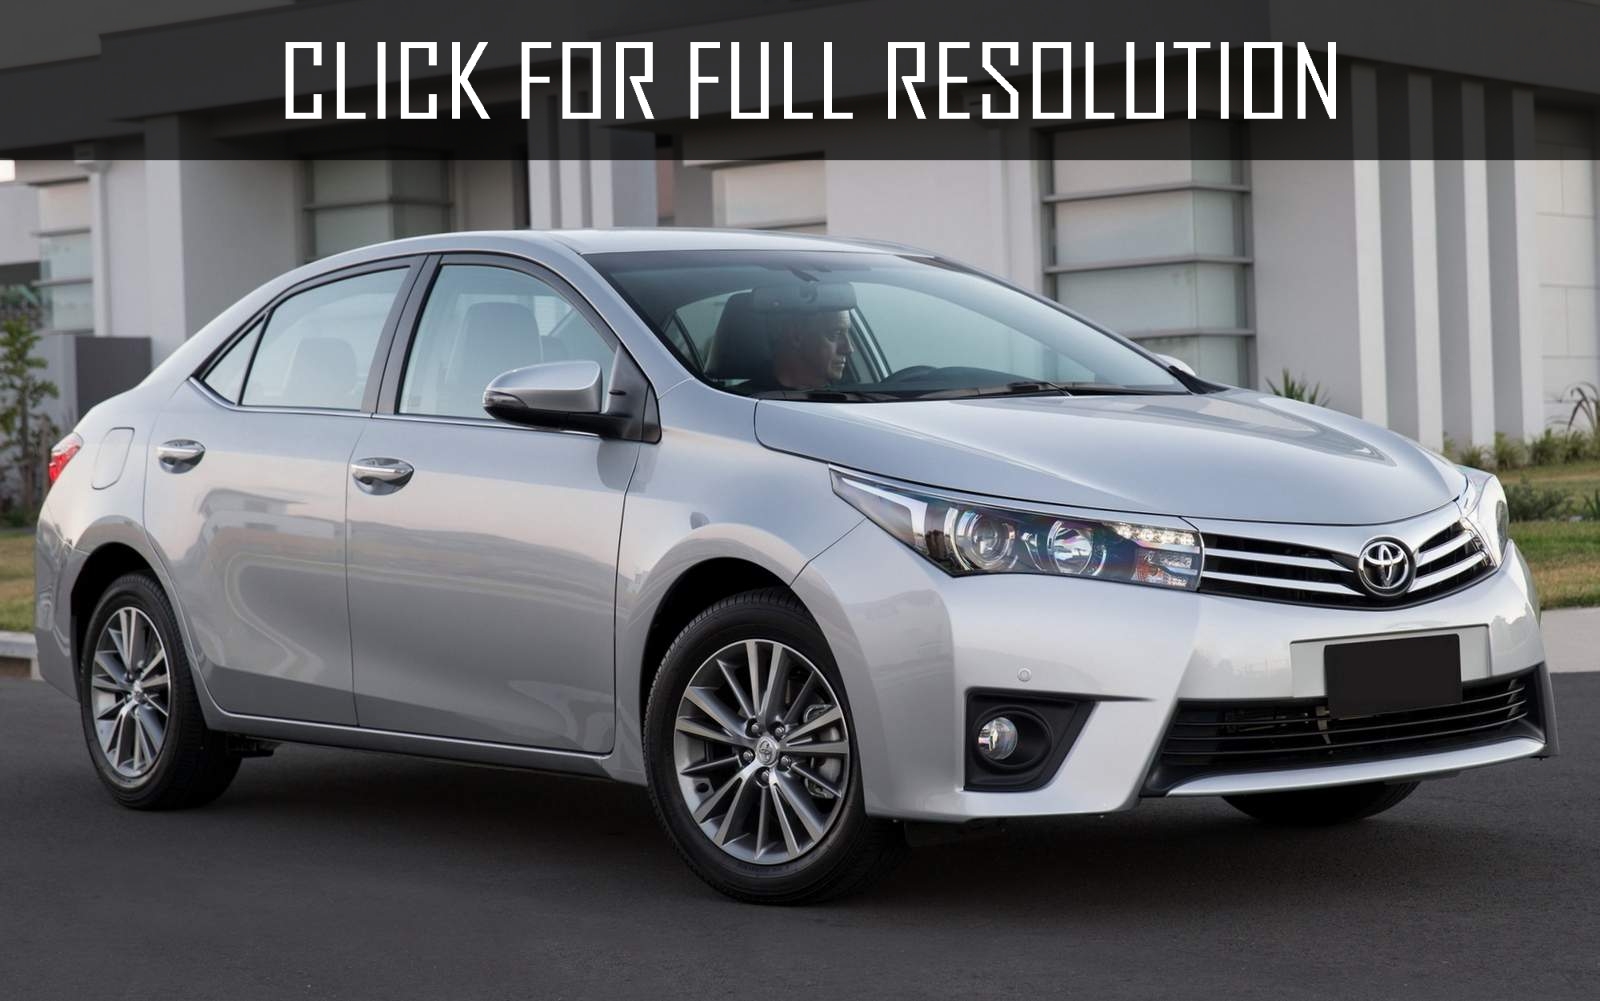 2015 Toyota Corolla Sedan news, reviews, msrp, ratings